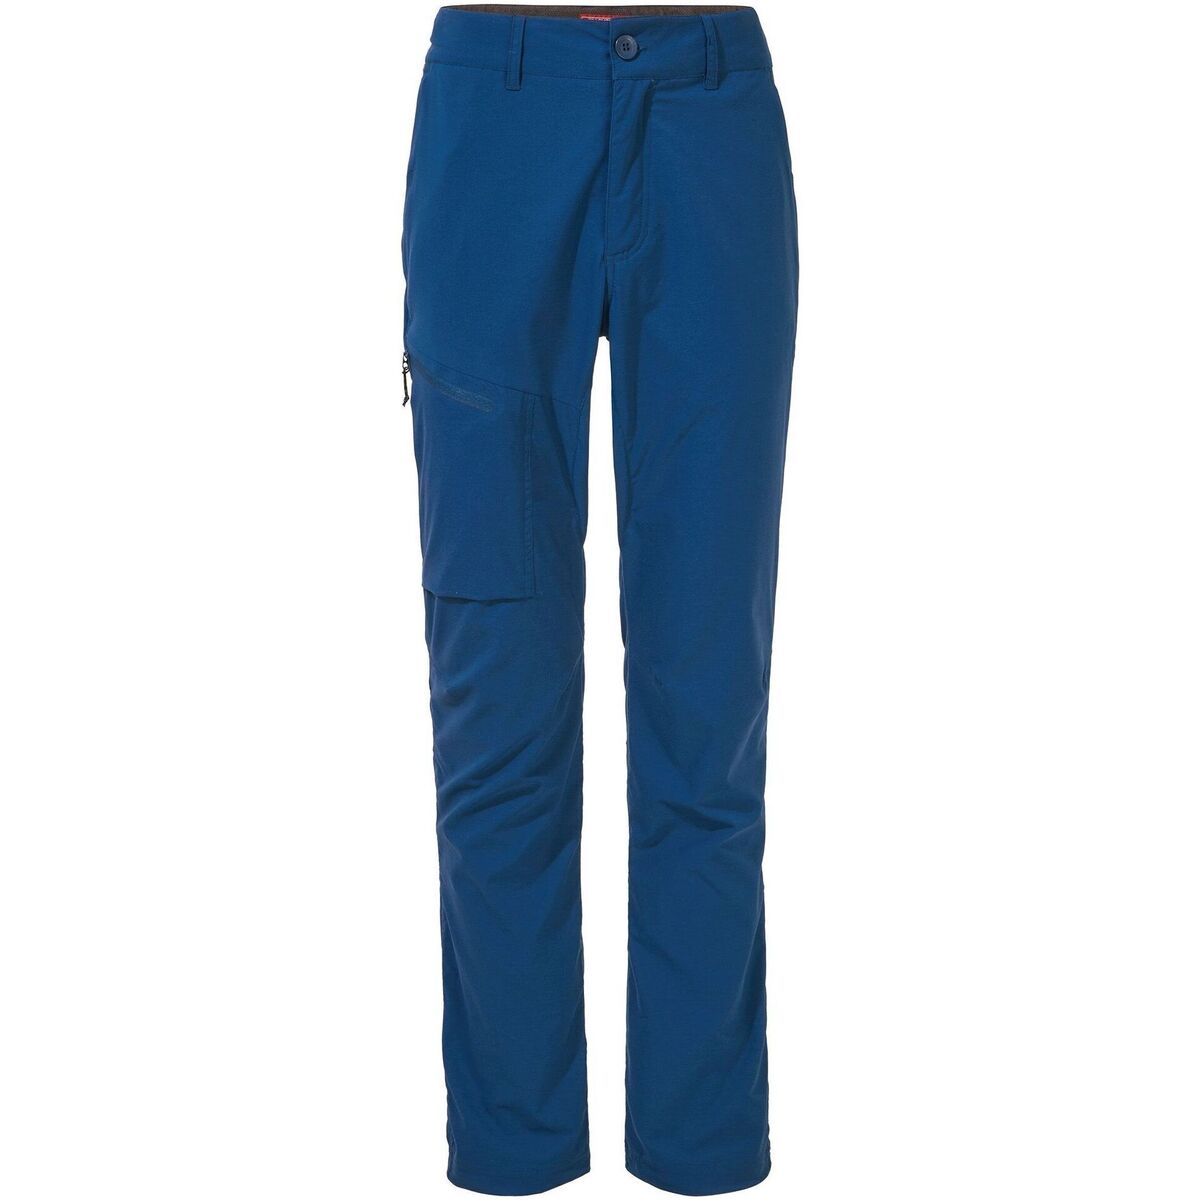 textil Hombre Pantalones Craghoppers Pro Active Azul